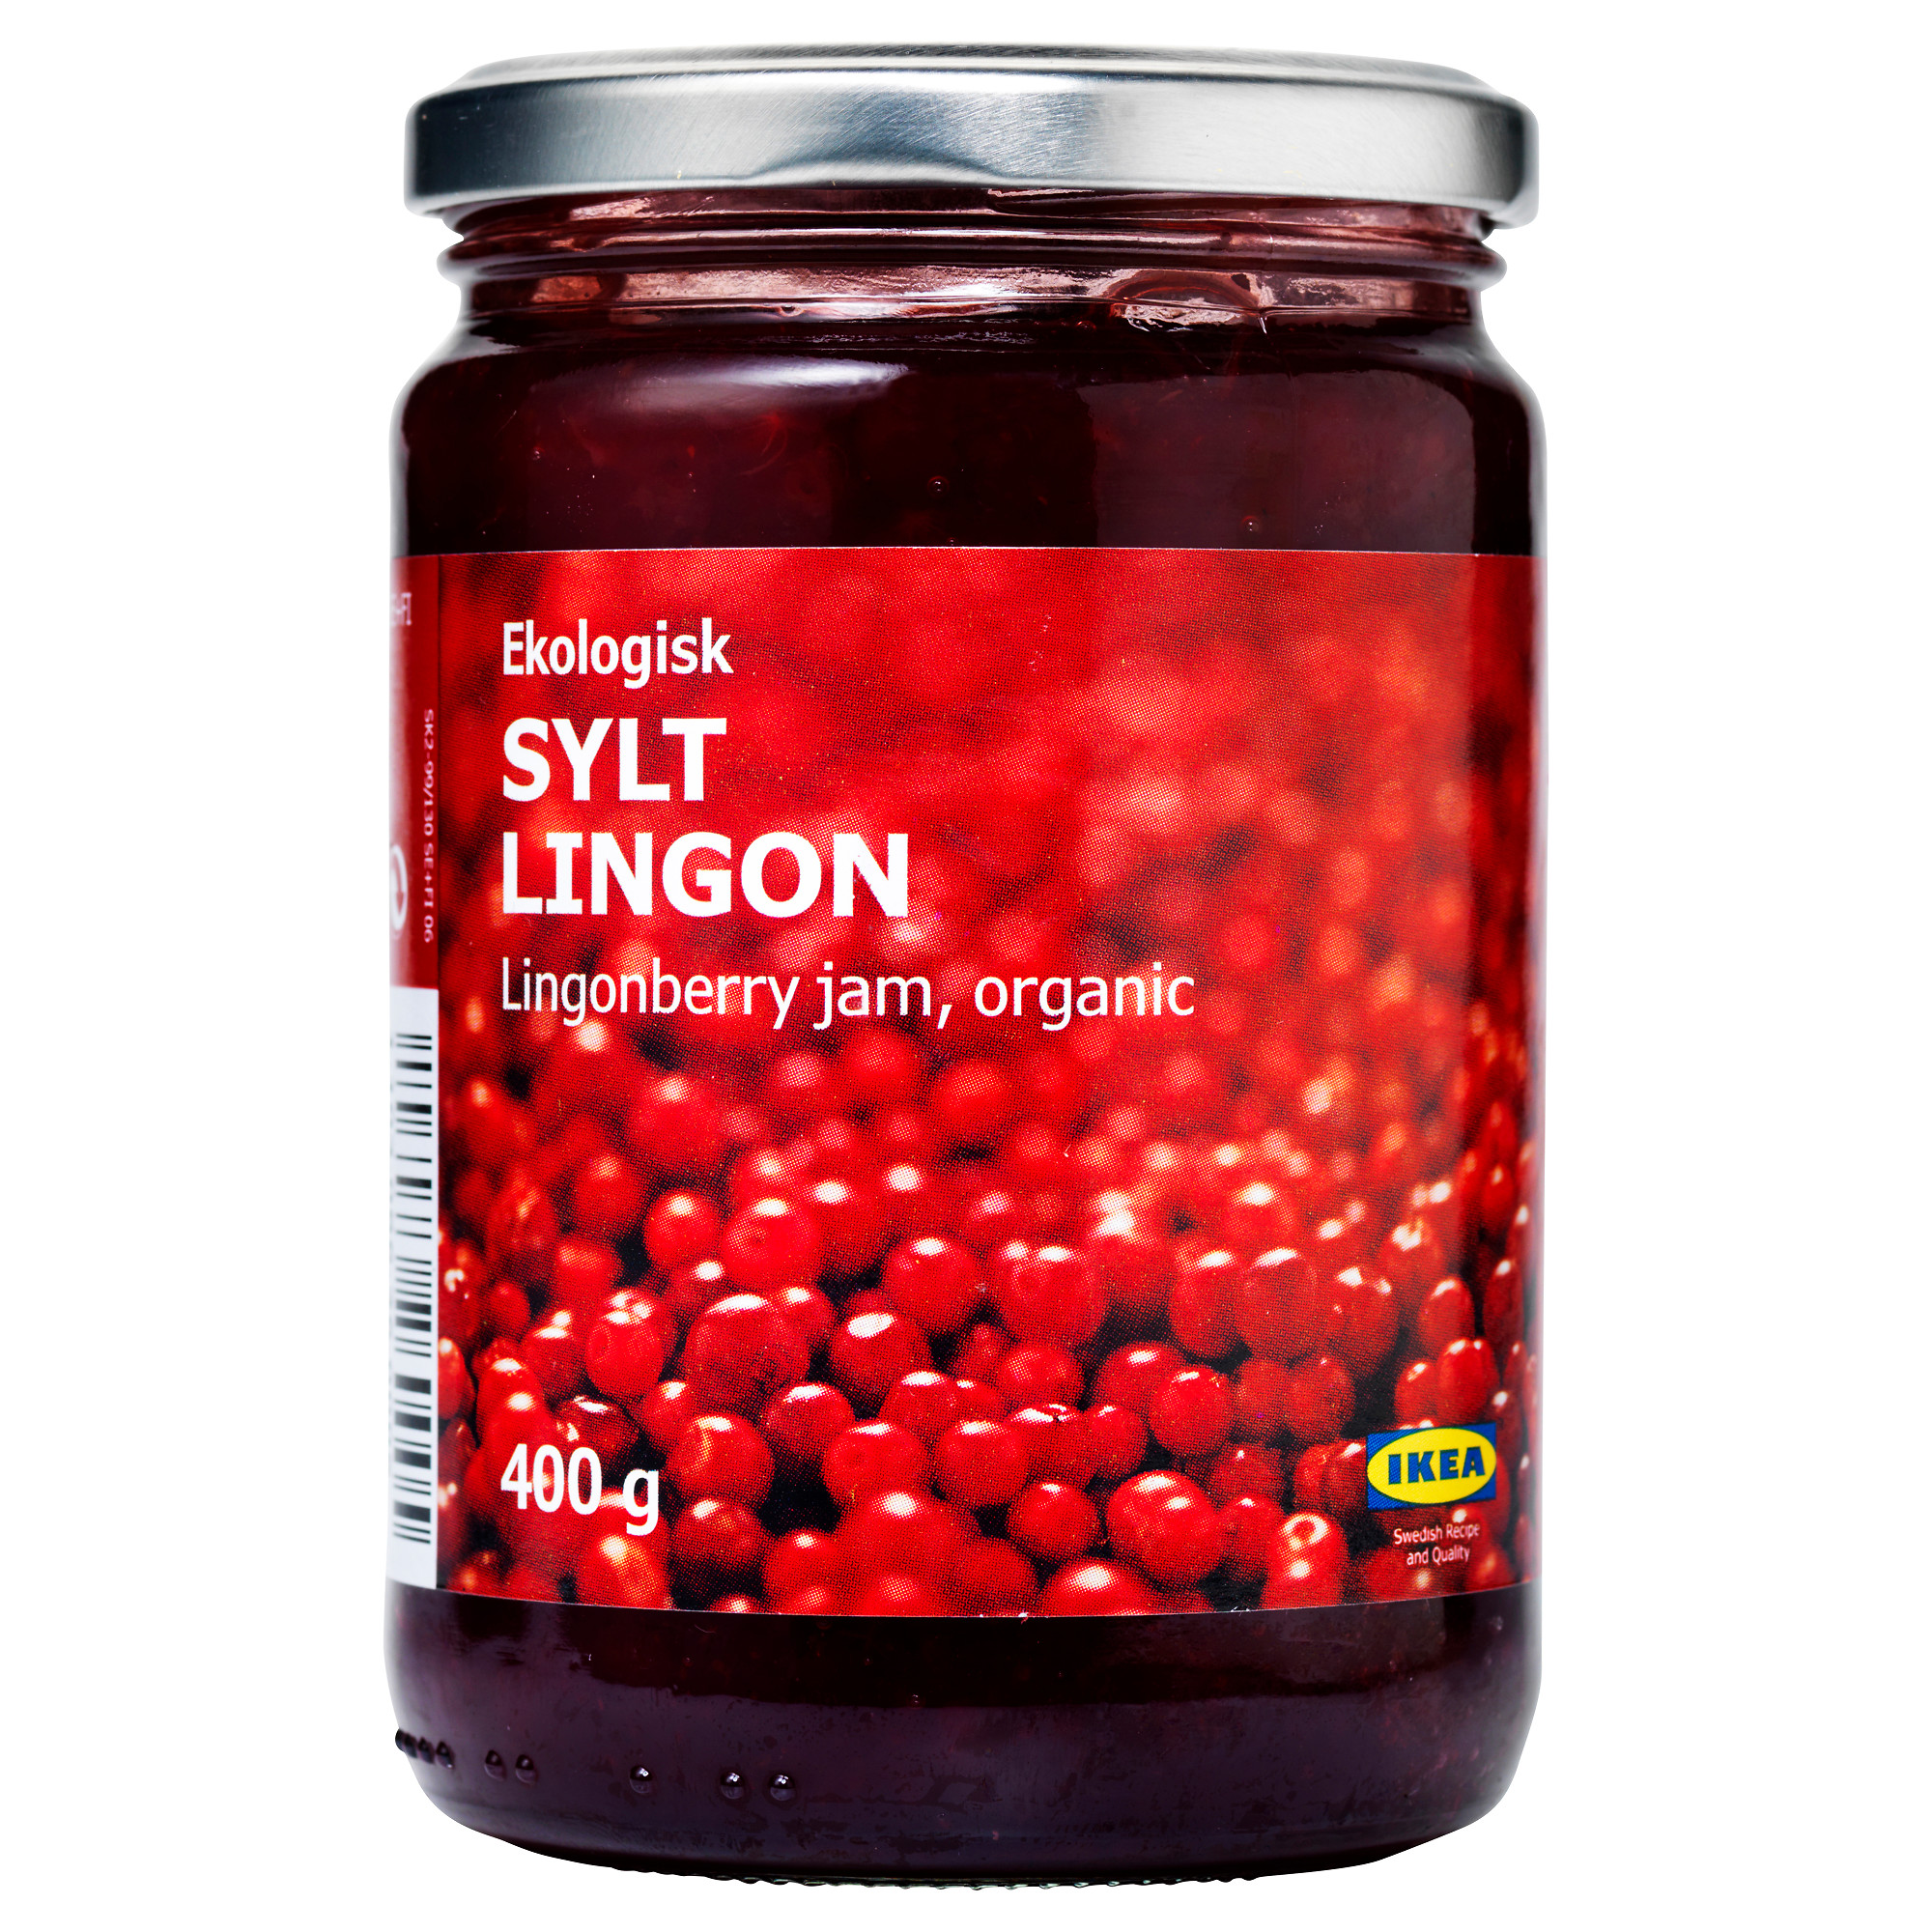 SYLT LINGON Lingonberry preserves - IKEA